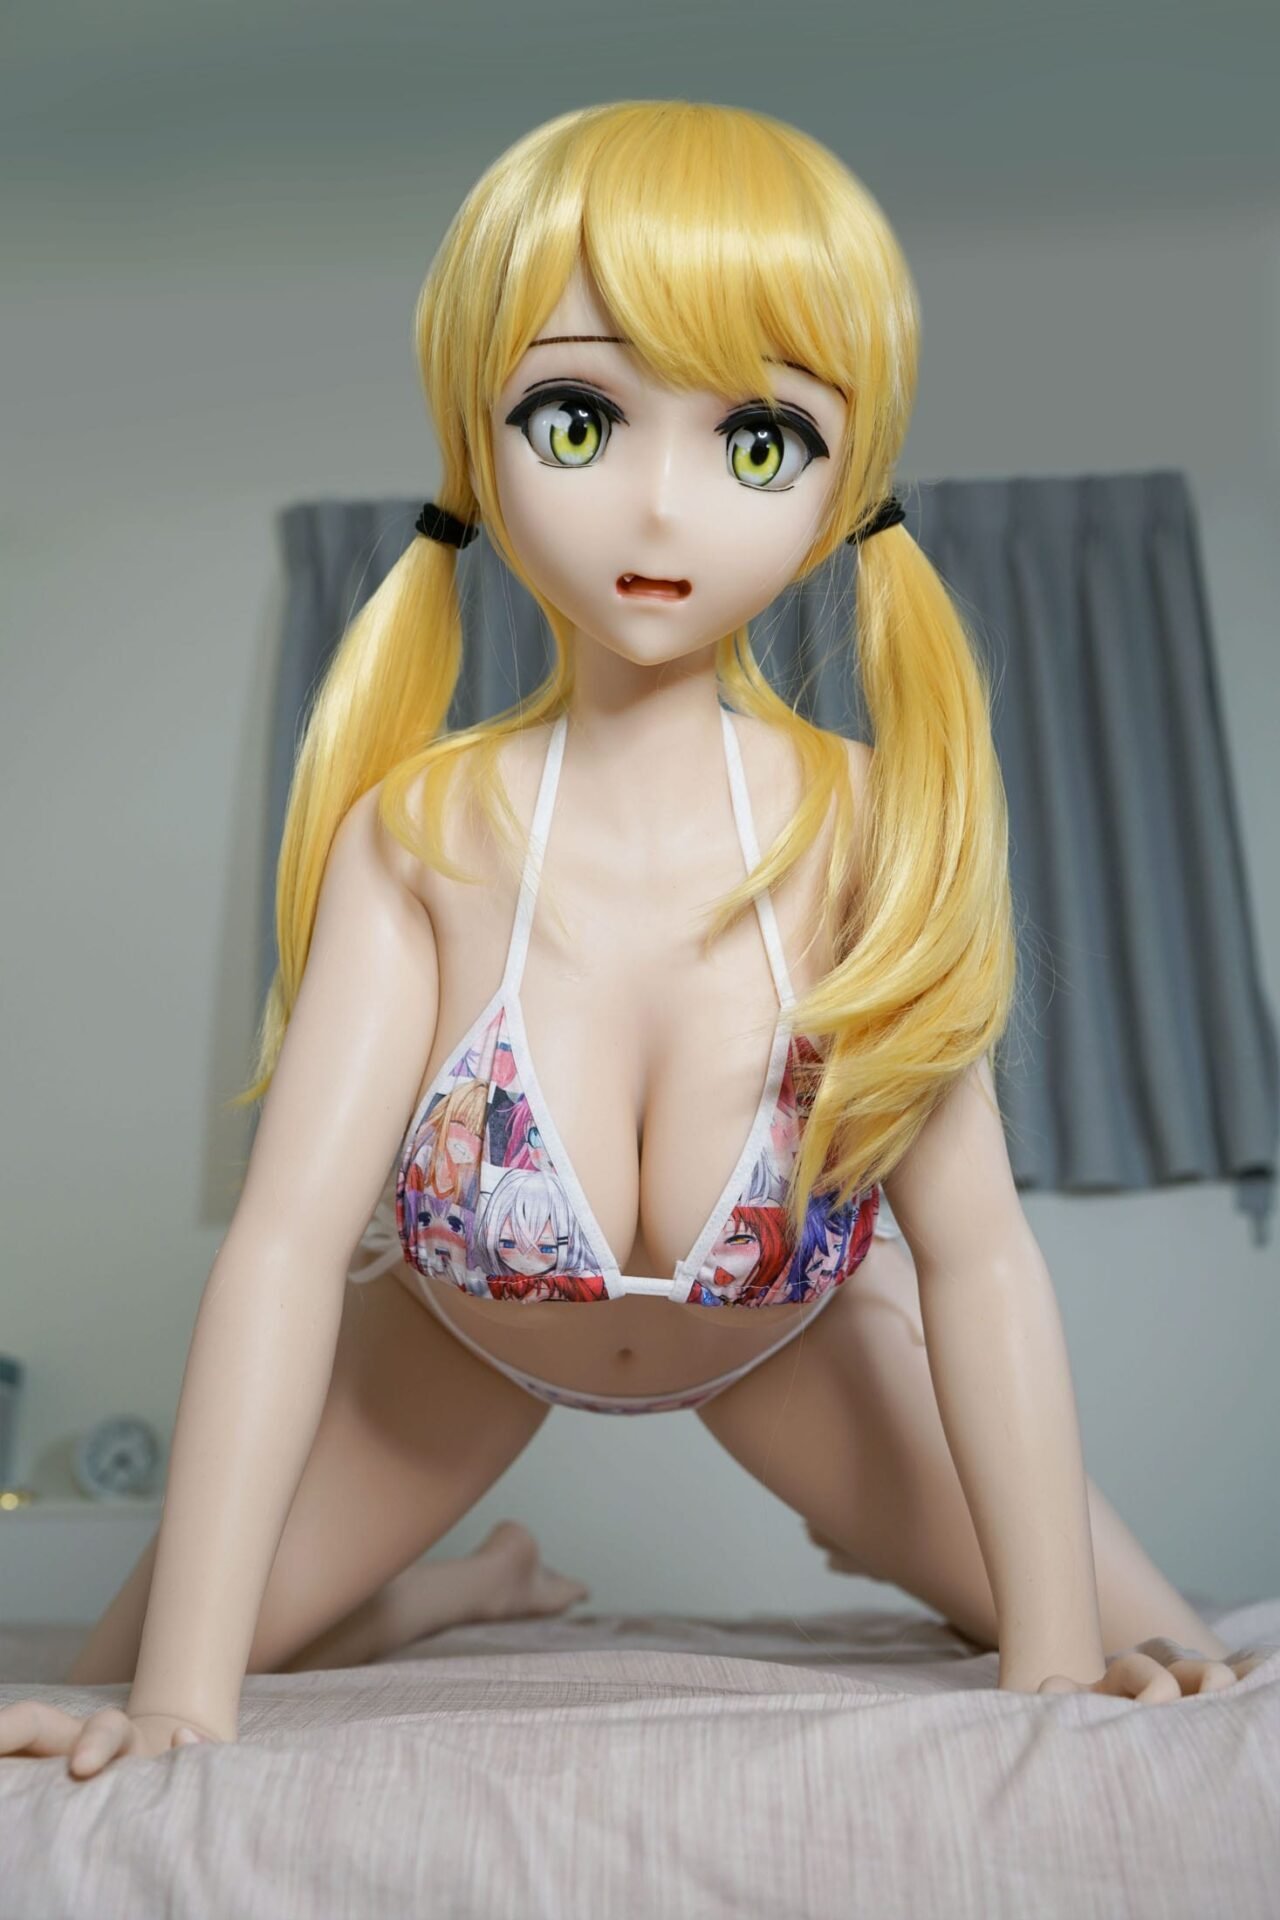 Anime Sex Dolls